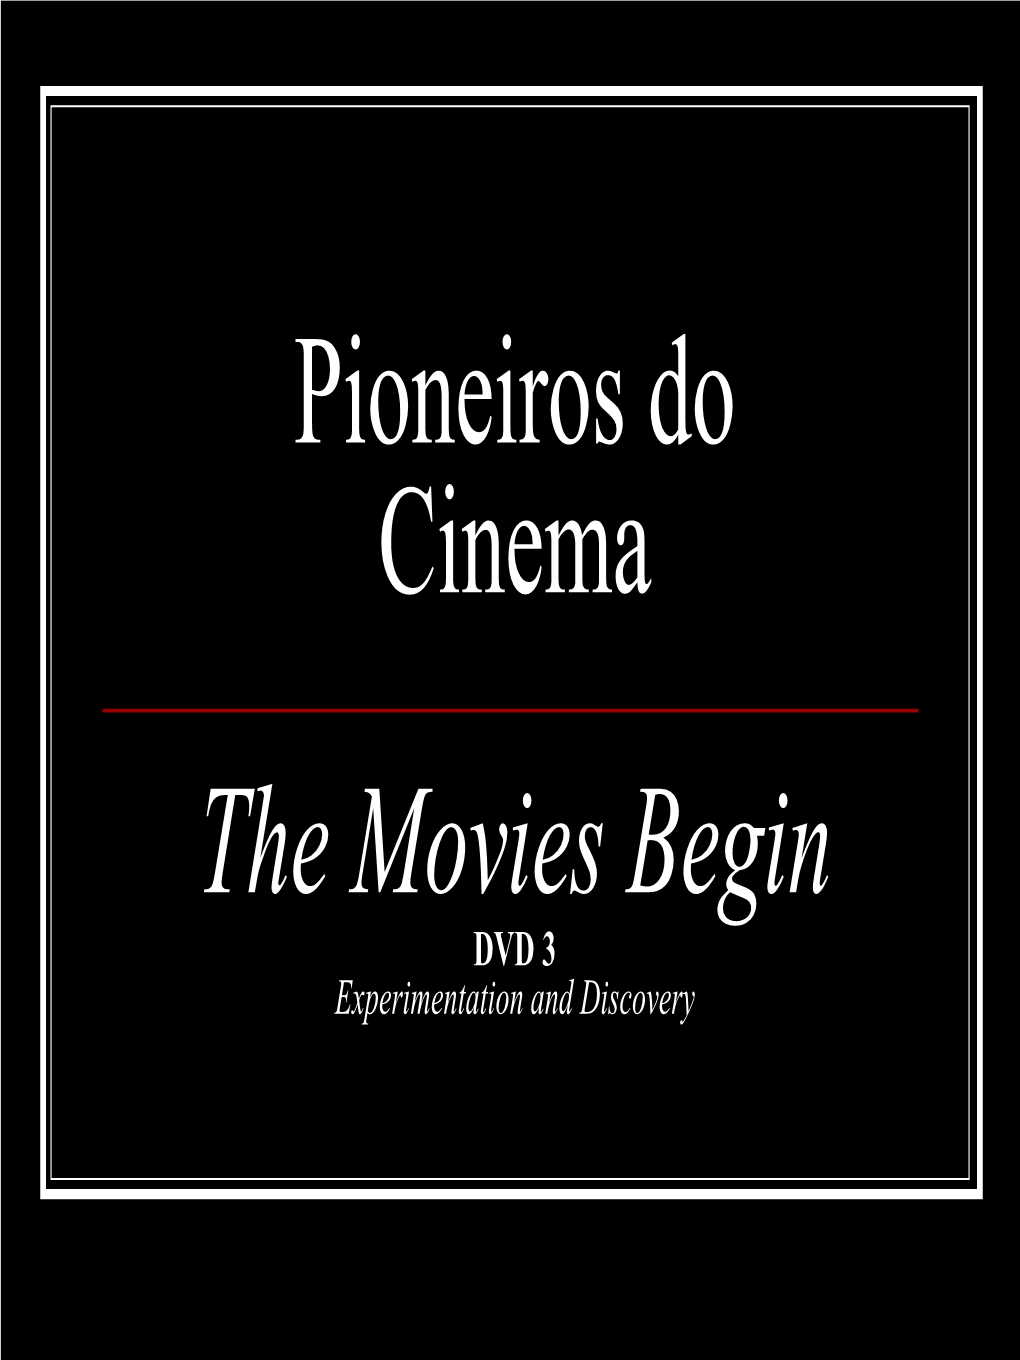 Pioneiros Do Cinema the Movies Begin DVD 3 Experimentation and Discovery Experimentation and Discovery